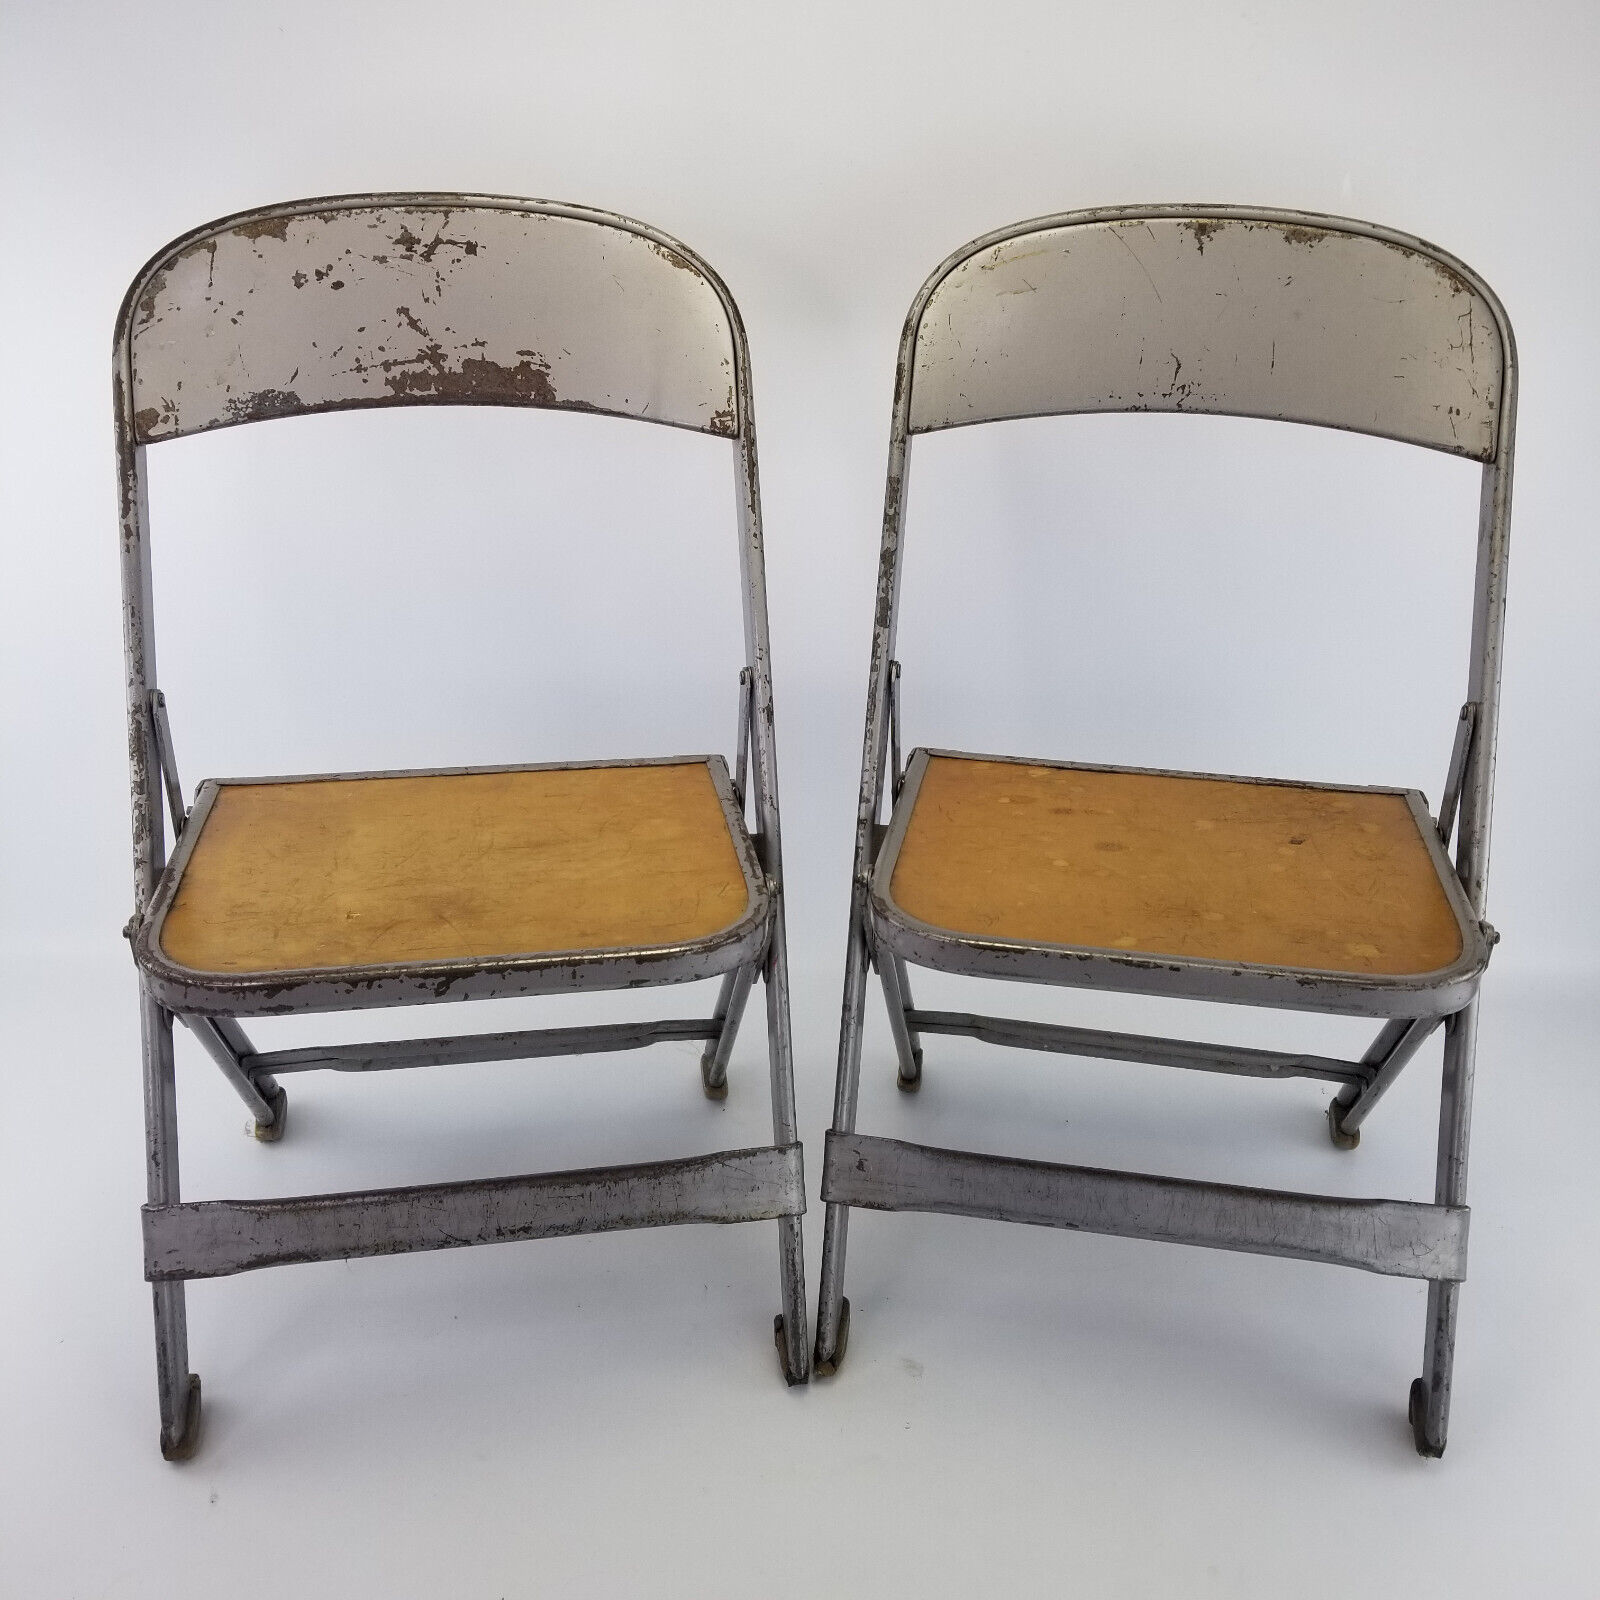 Lot of (2) Vtg 1950s Metal Children's Child's Folding Chair Wood Seat Clarin Mfg